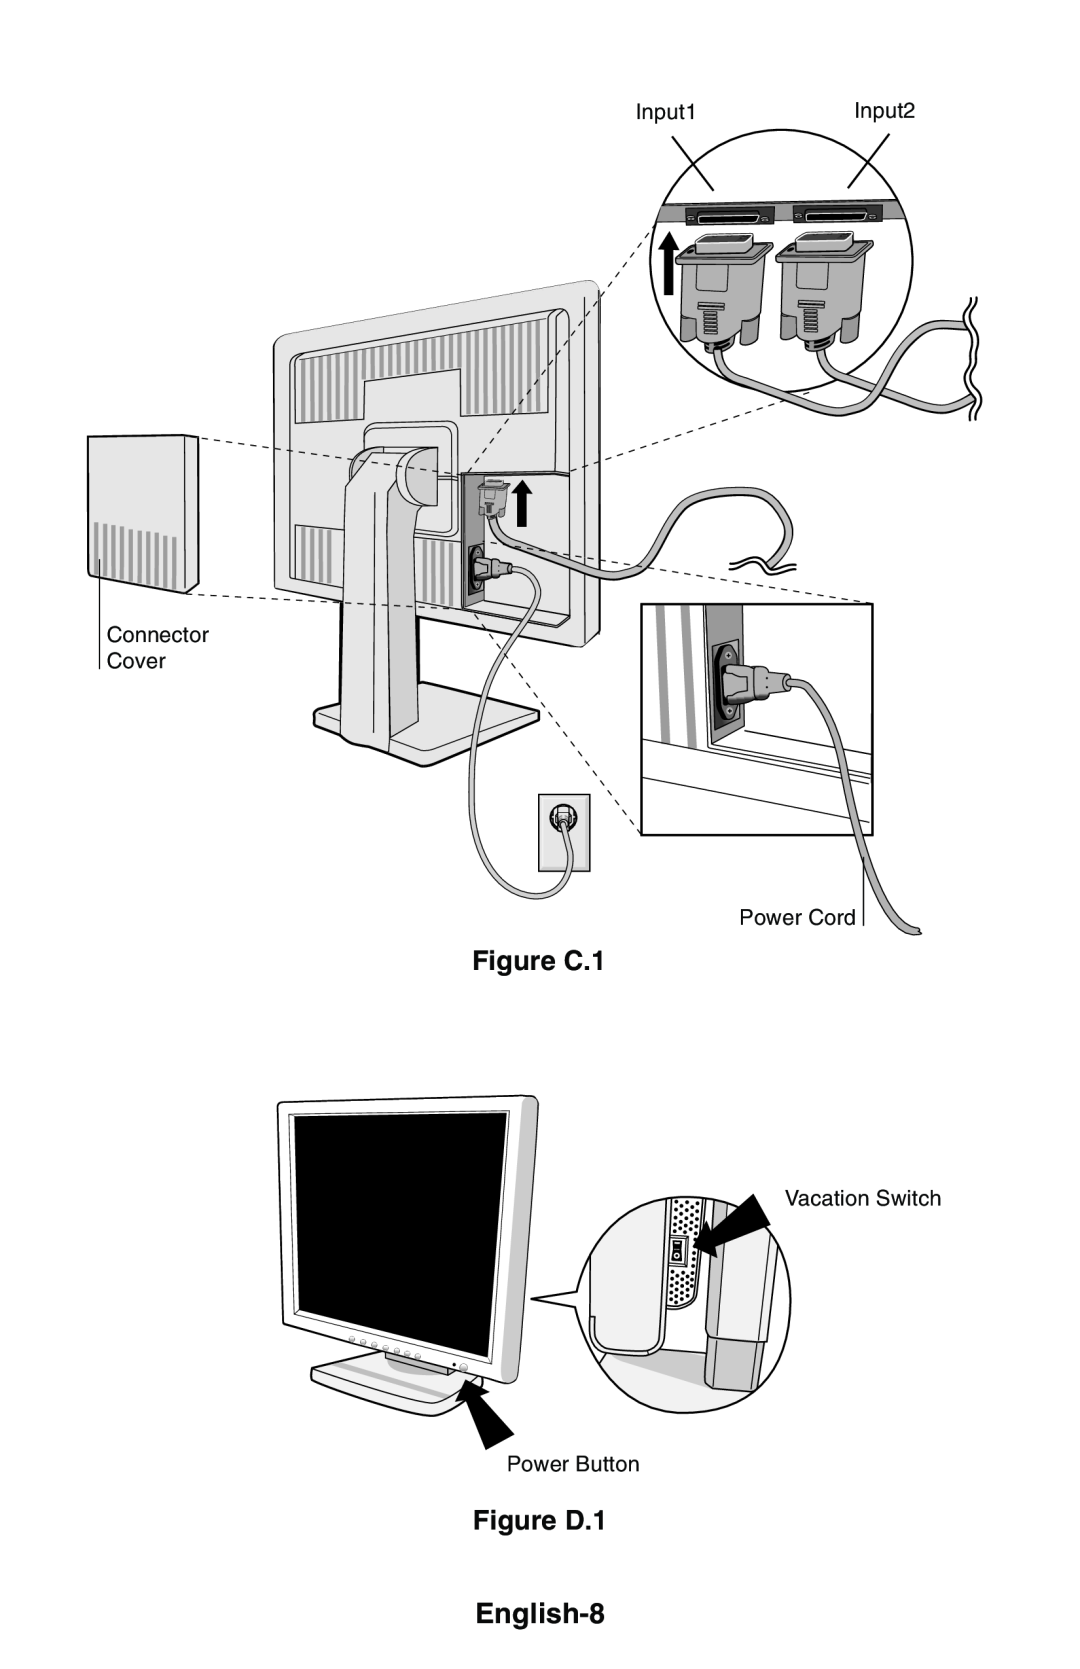 NEC LCD1850E user manual English-8, Figure C.1, Figure D.1 